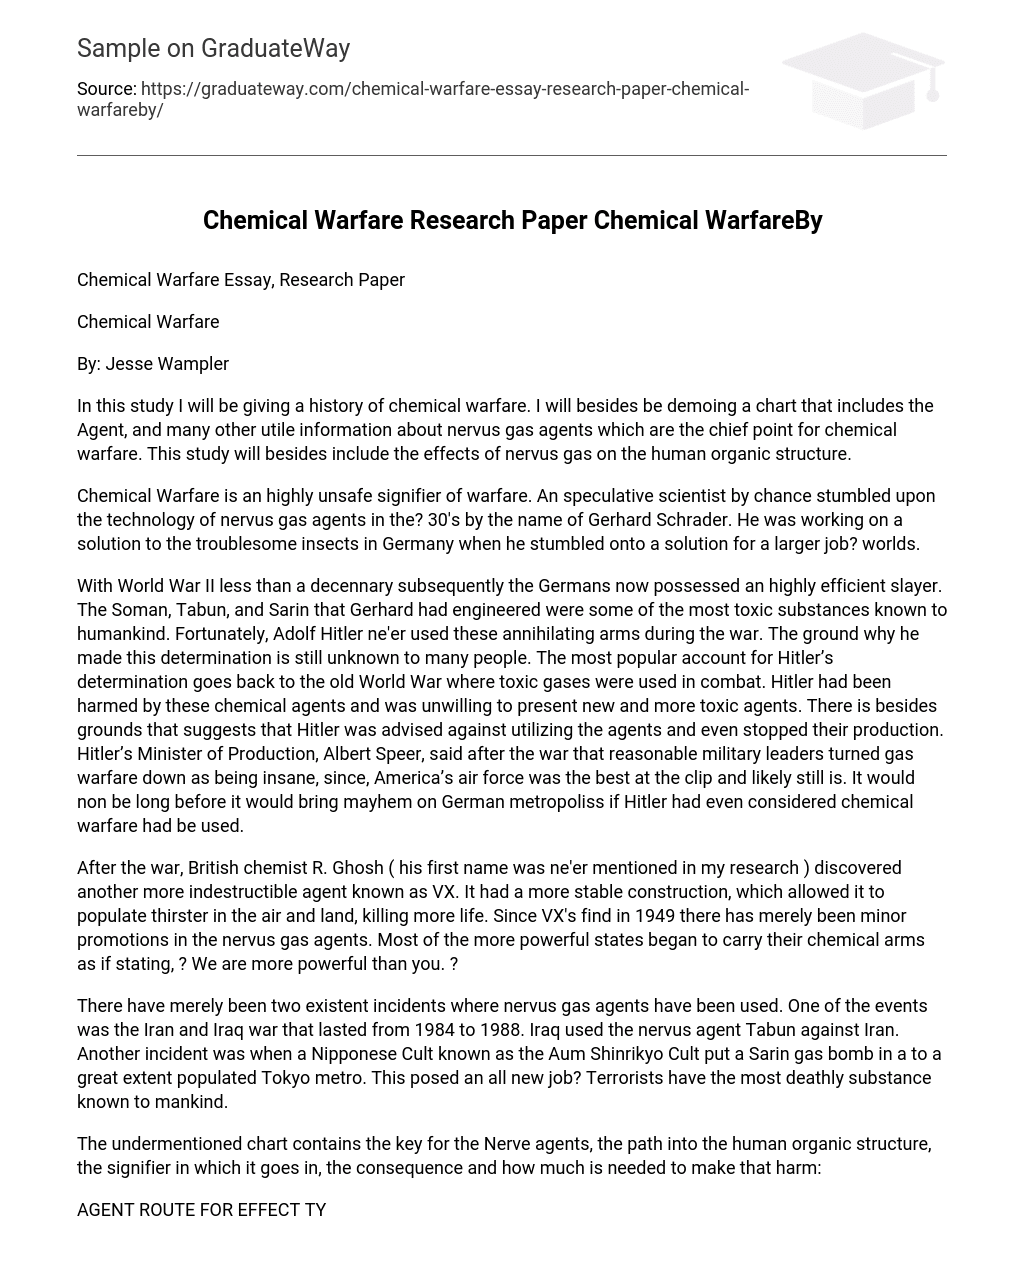 Chemical Warfare Research Paper Chemical Warfare